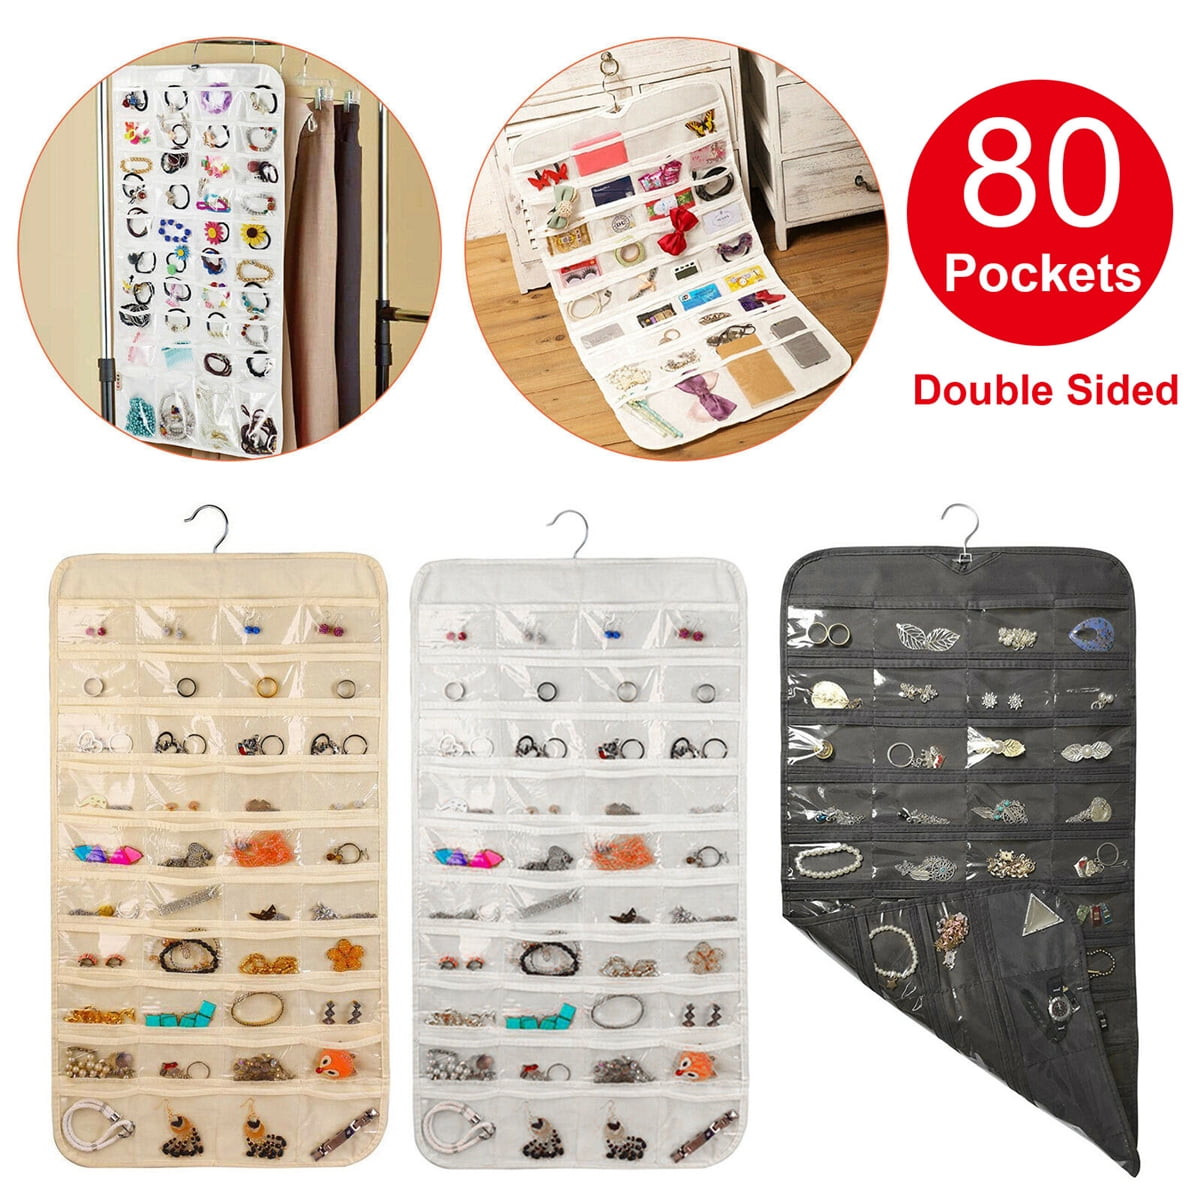 Details about   80 Pocket Hanging Storage Bag Holder Travel Jewelry Organizer Easy to find